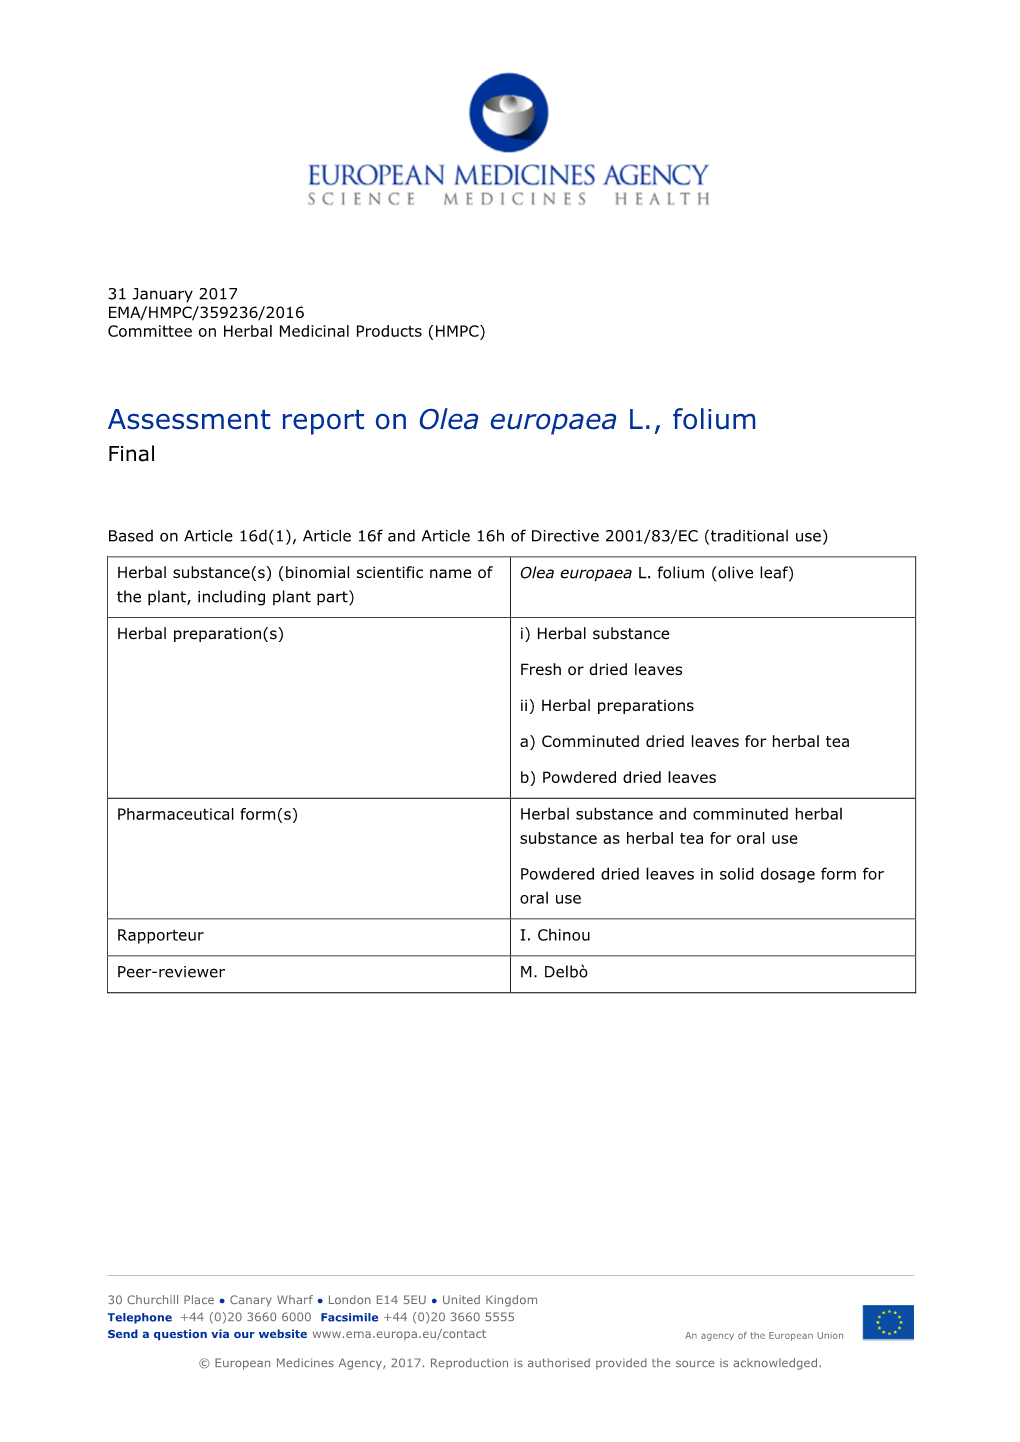 Assessment Report on Olea Europaea L., Folium Final